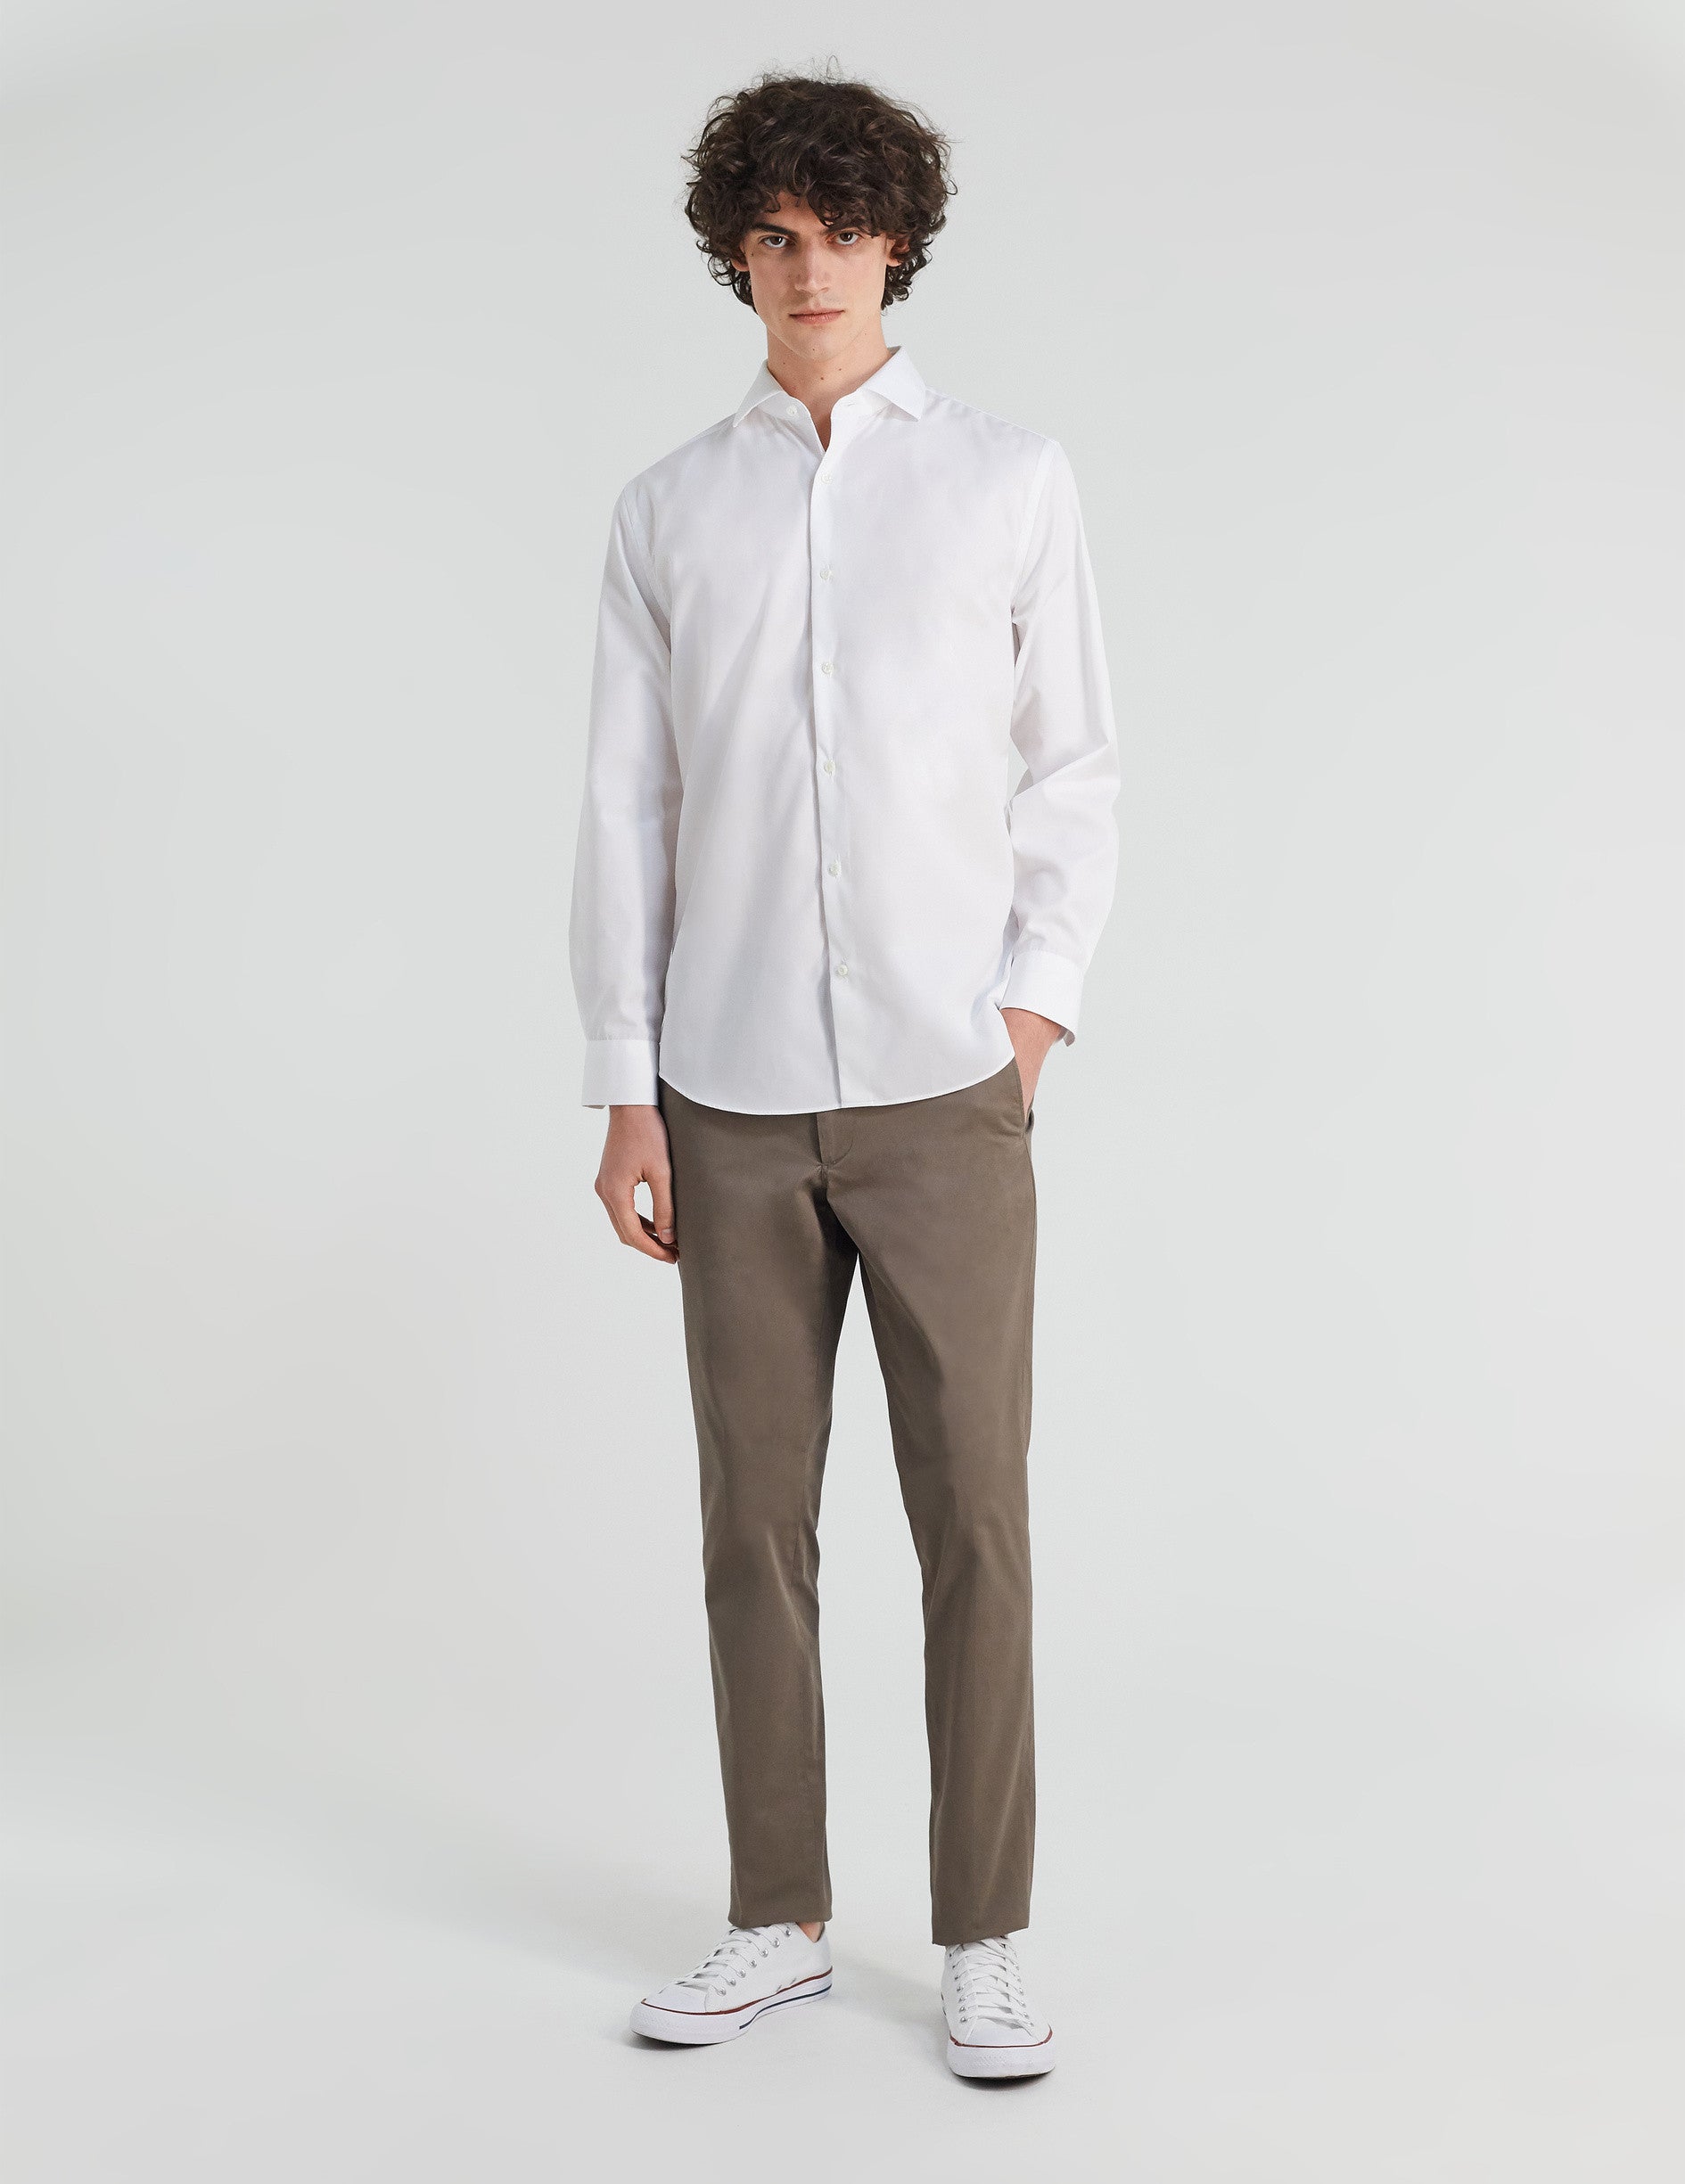 Classic White Crease-Resistant Shirt - Poplin - Italian Collar